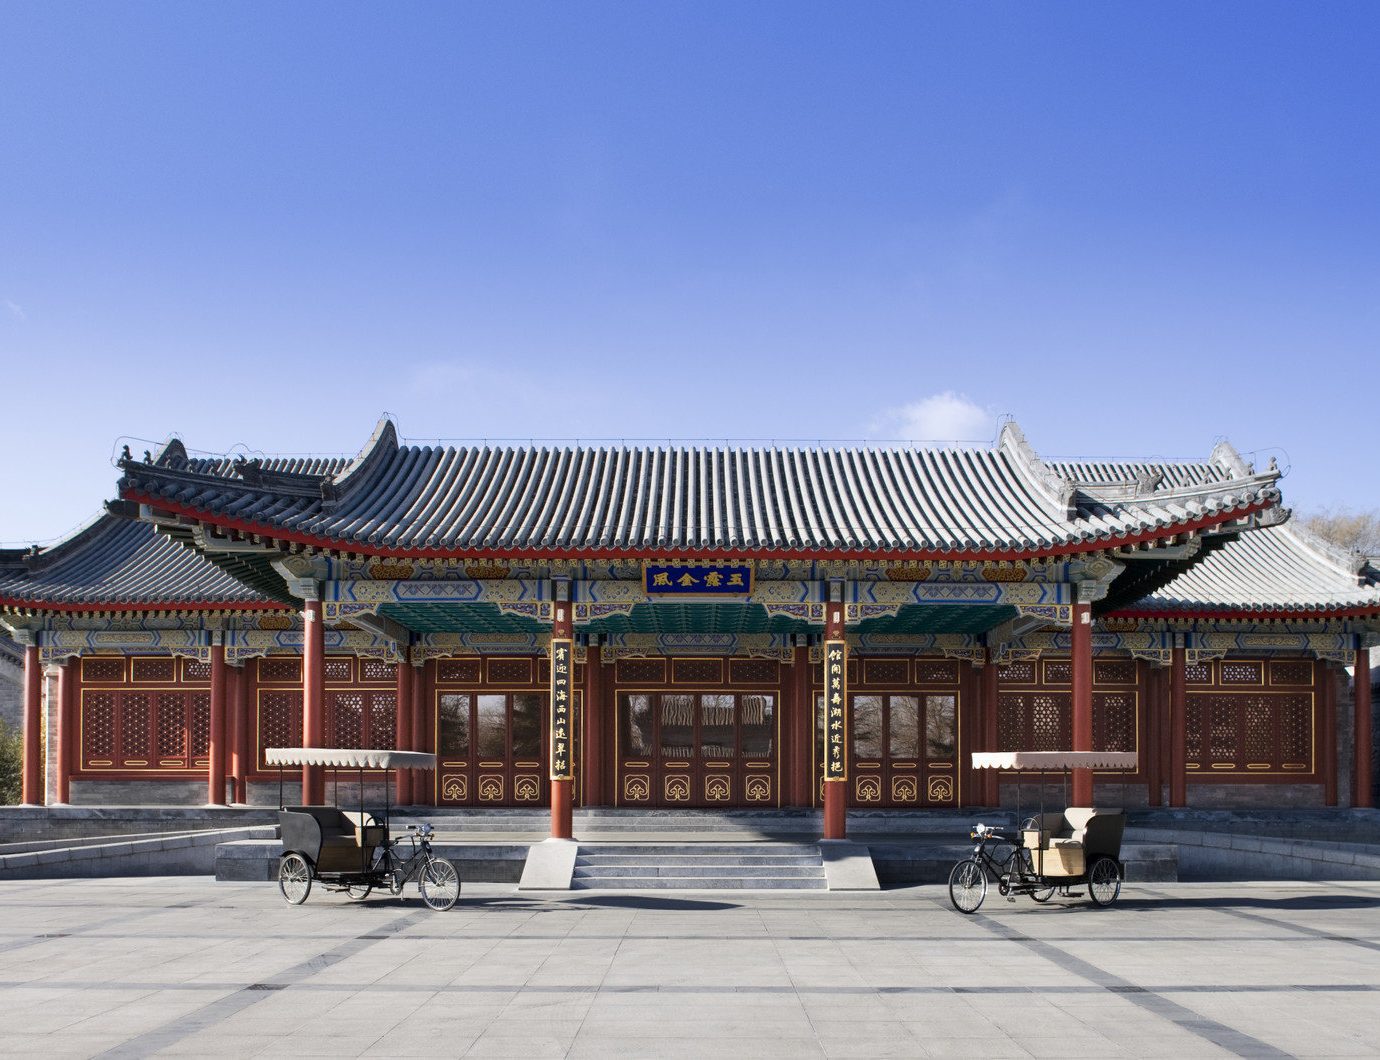 Facade of Aman Summer Palace in Beijing